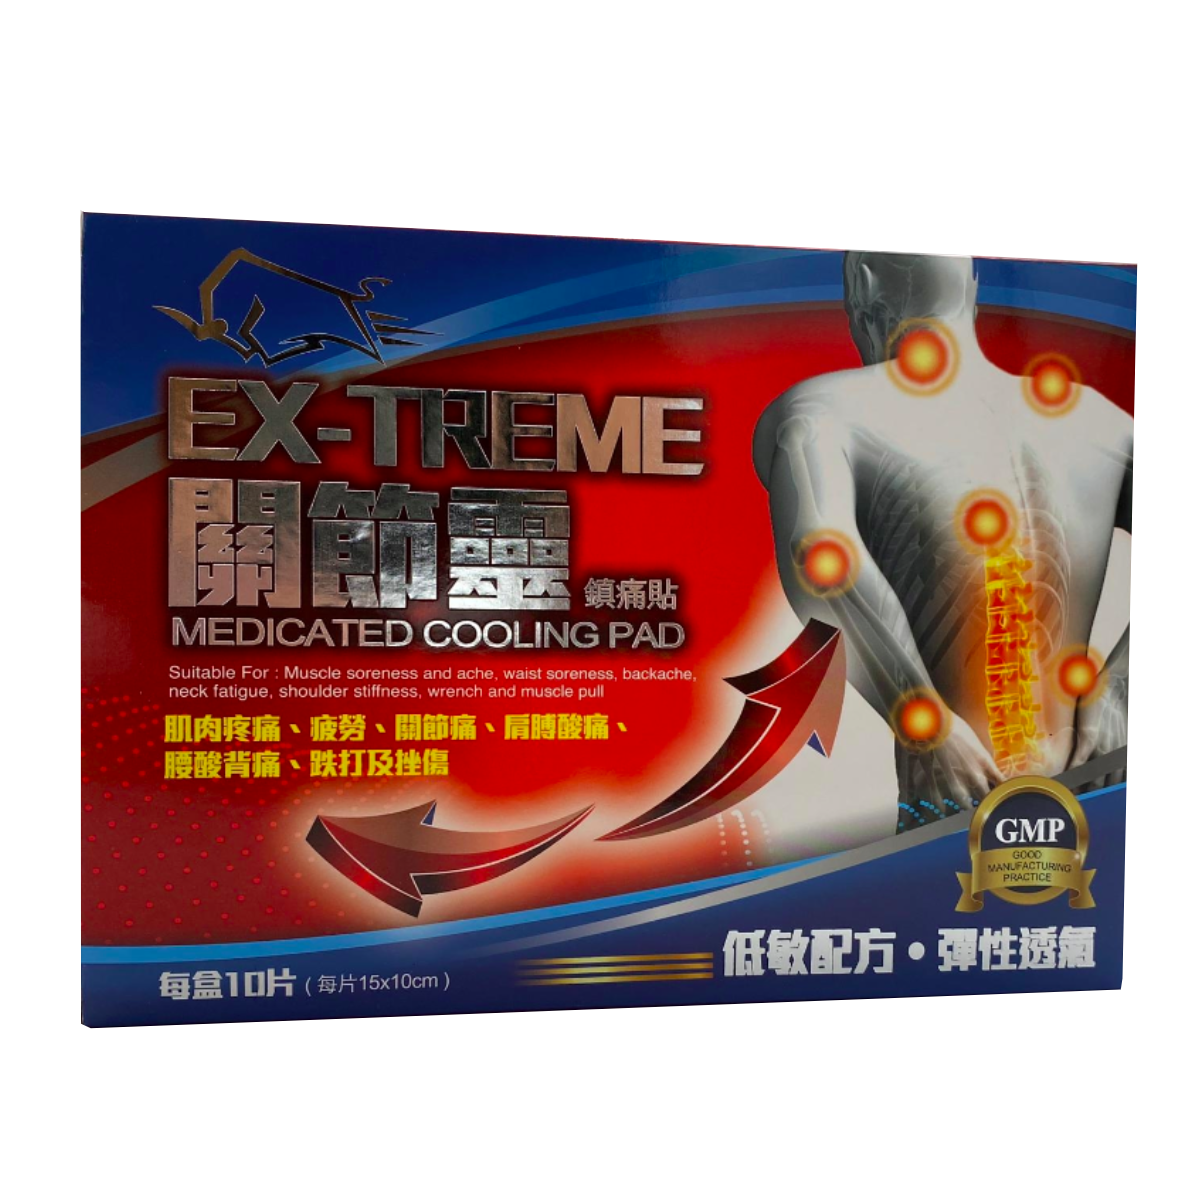 EX-TREME 關節靈 - 酸痛貼 (15×10cm) 1盒10片